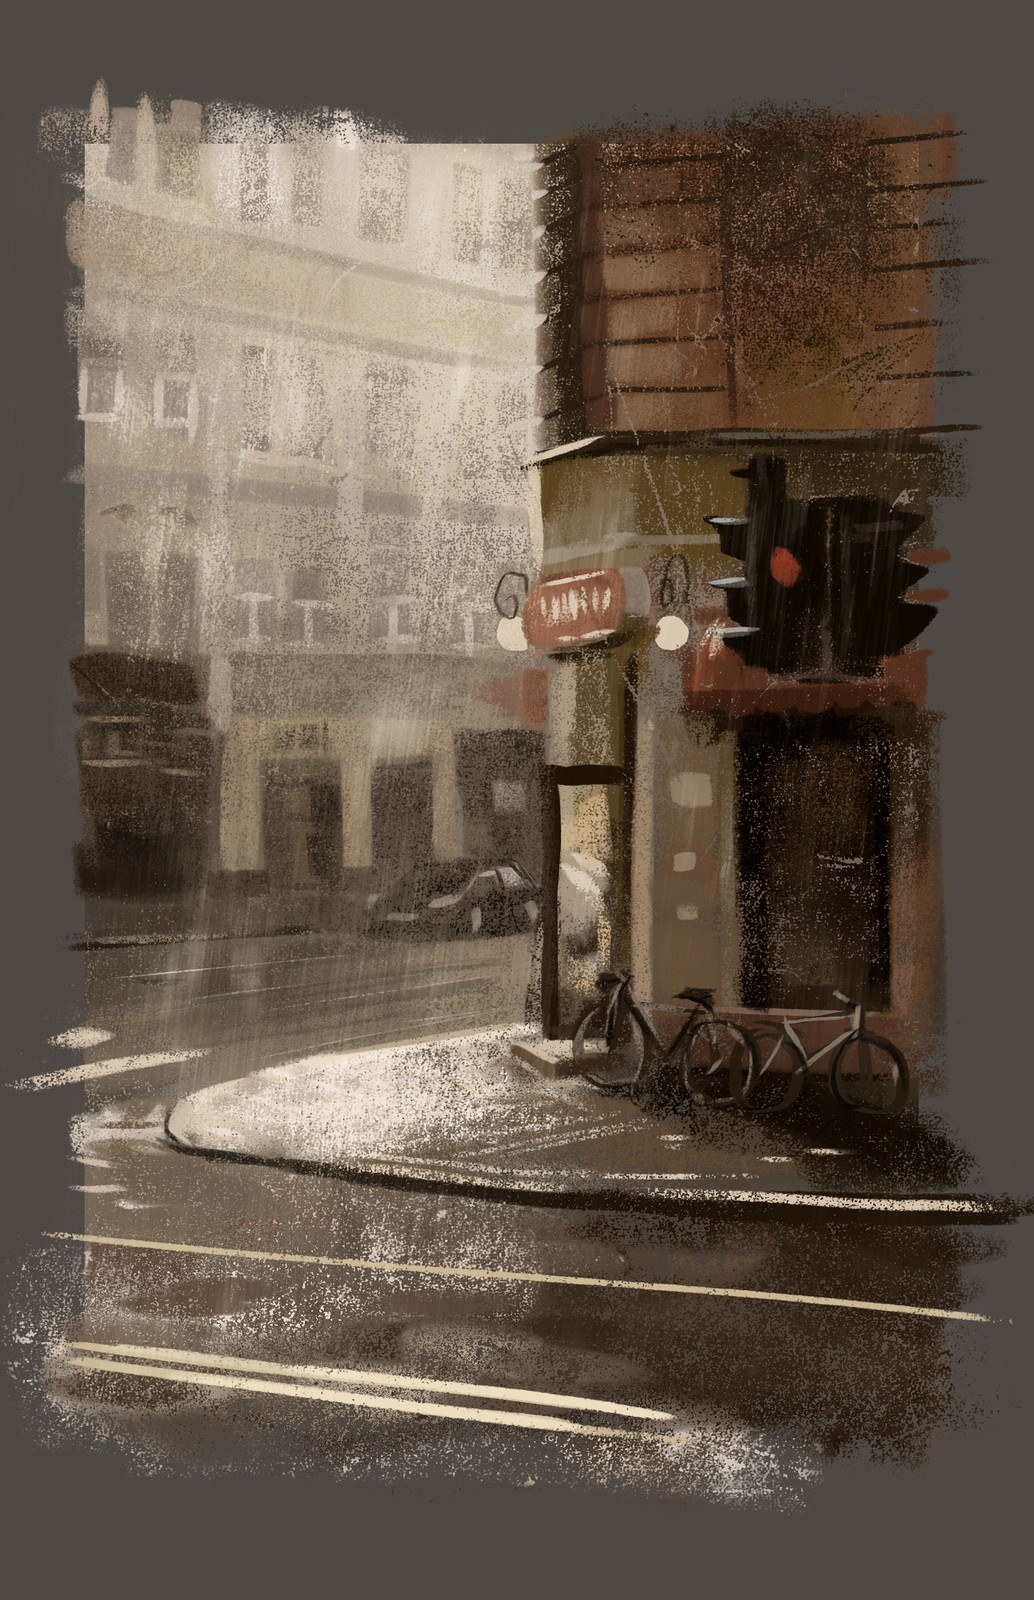 Paris Corner Rain - study from a photo